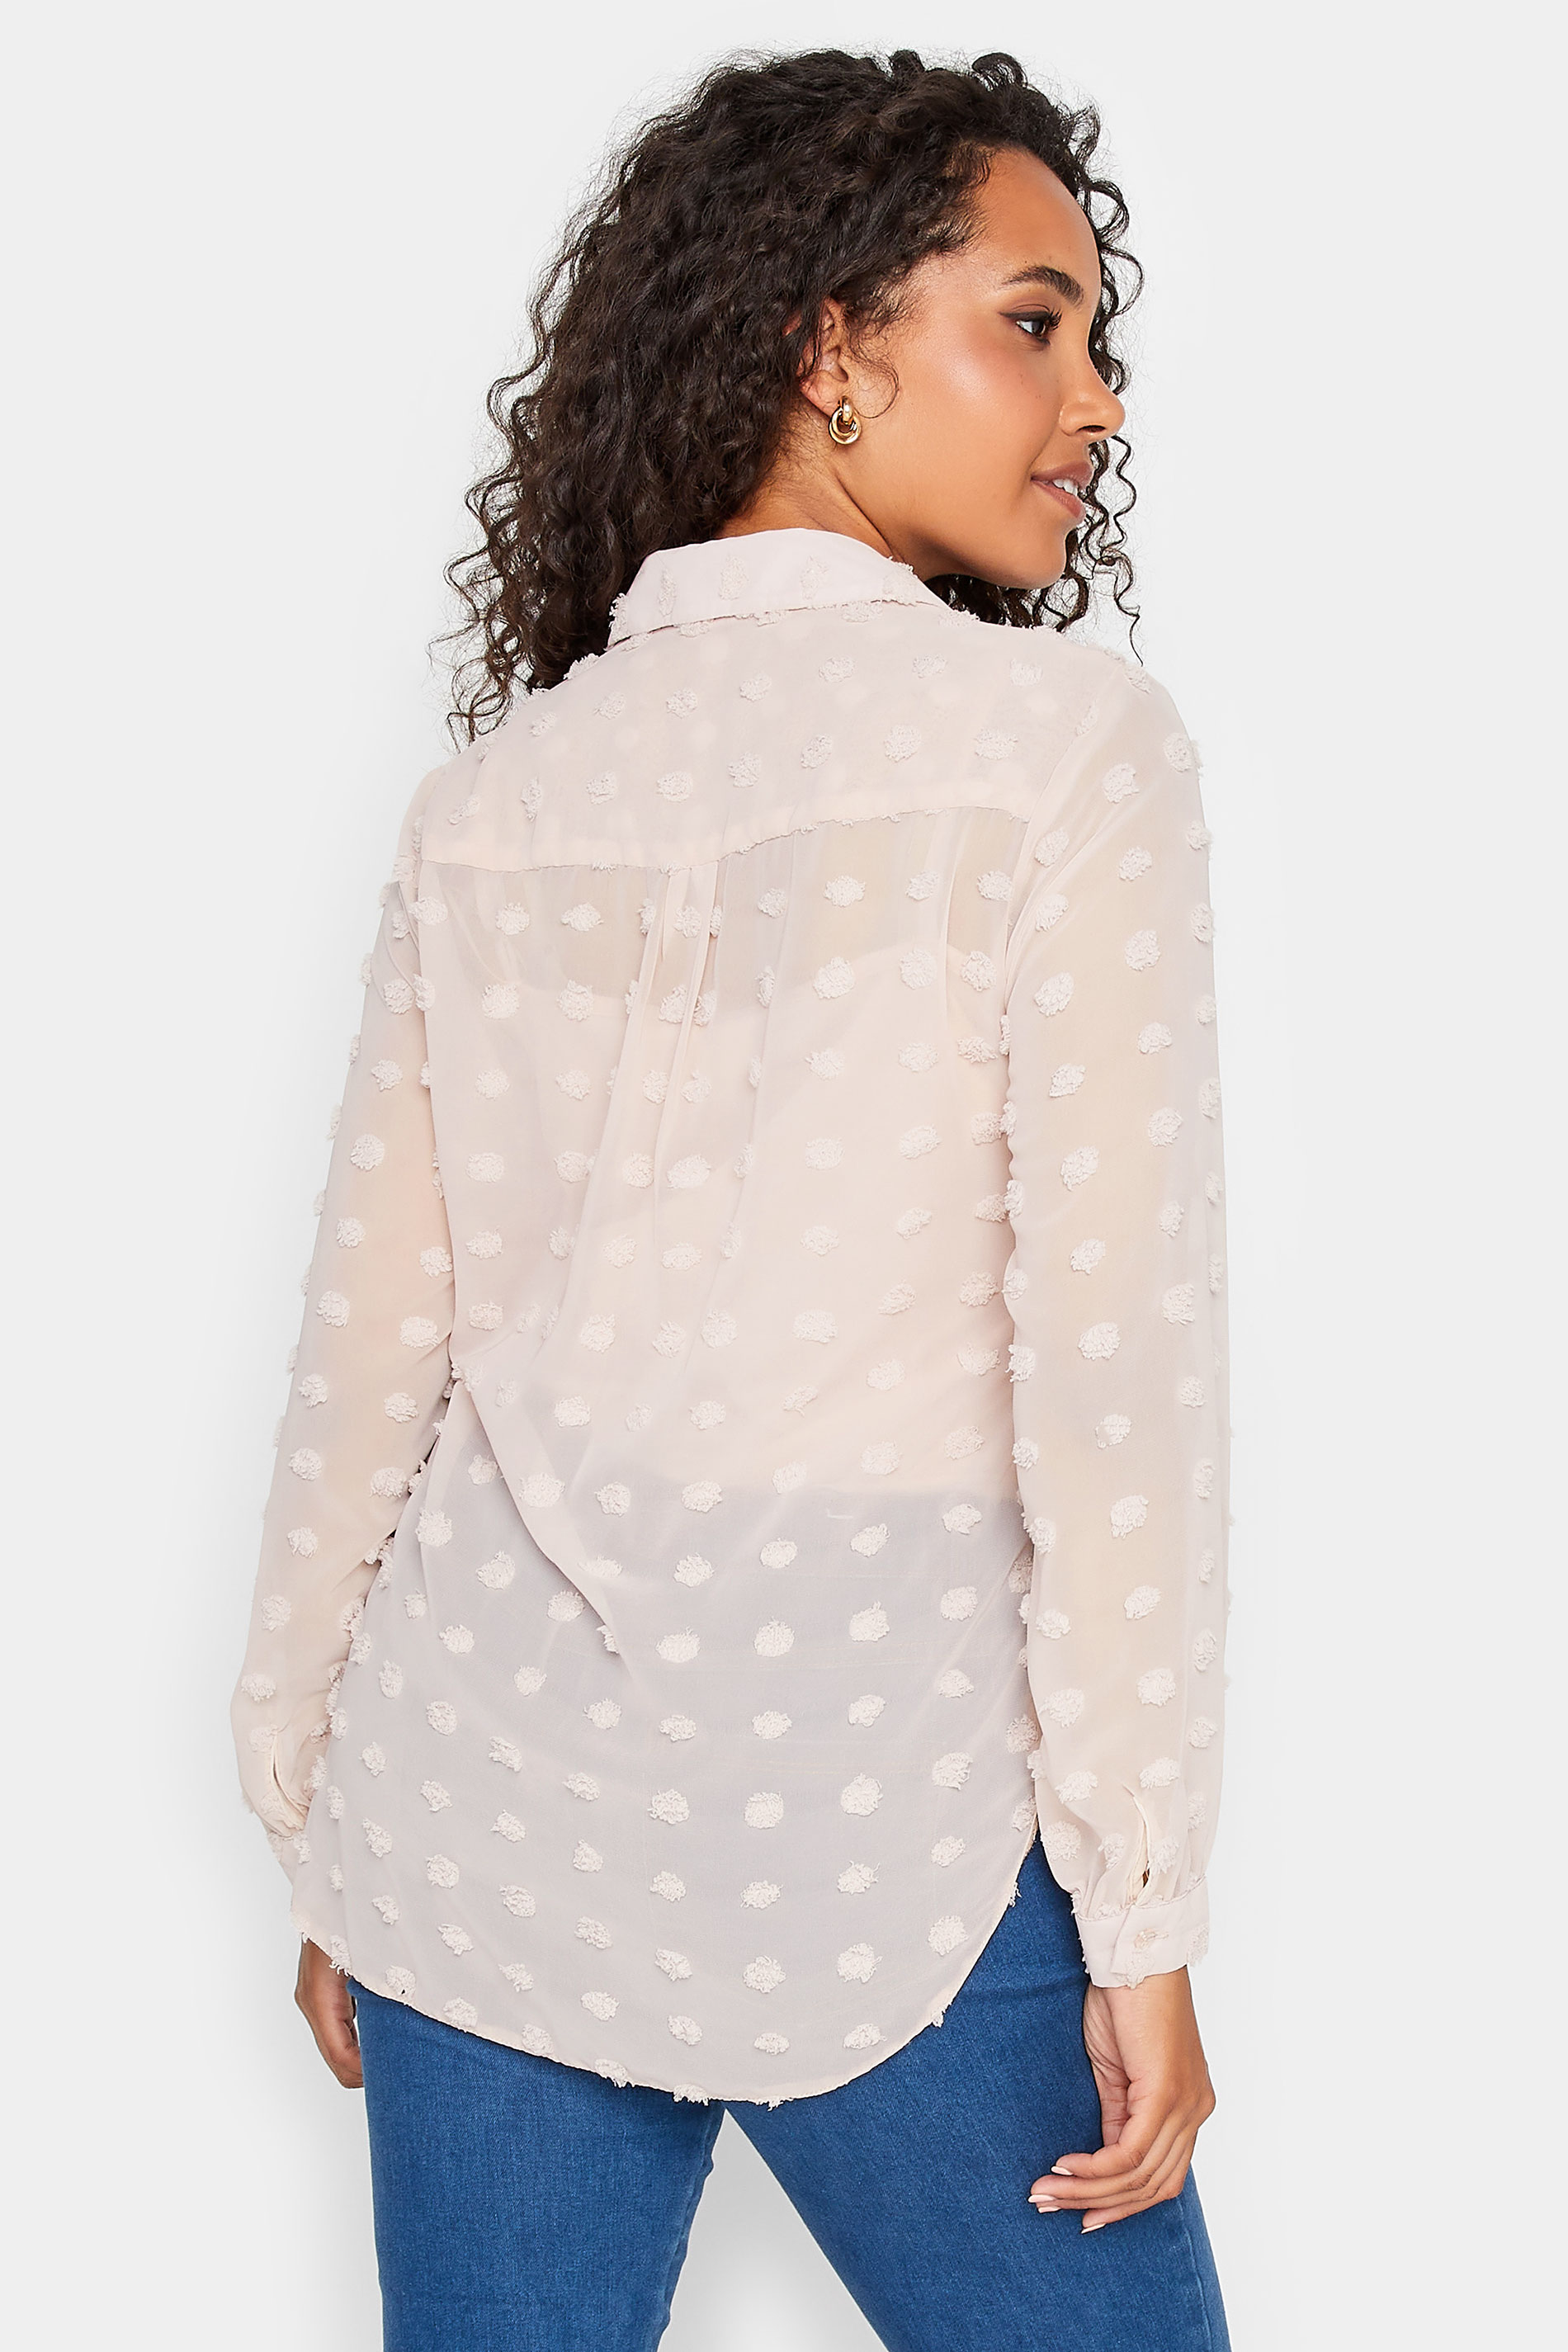 M&Co Pink Dobby Spot Shirt | M&Co 3